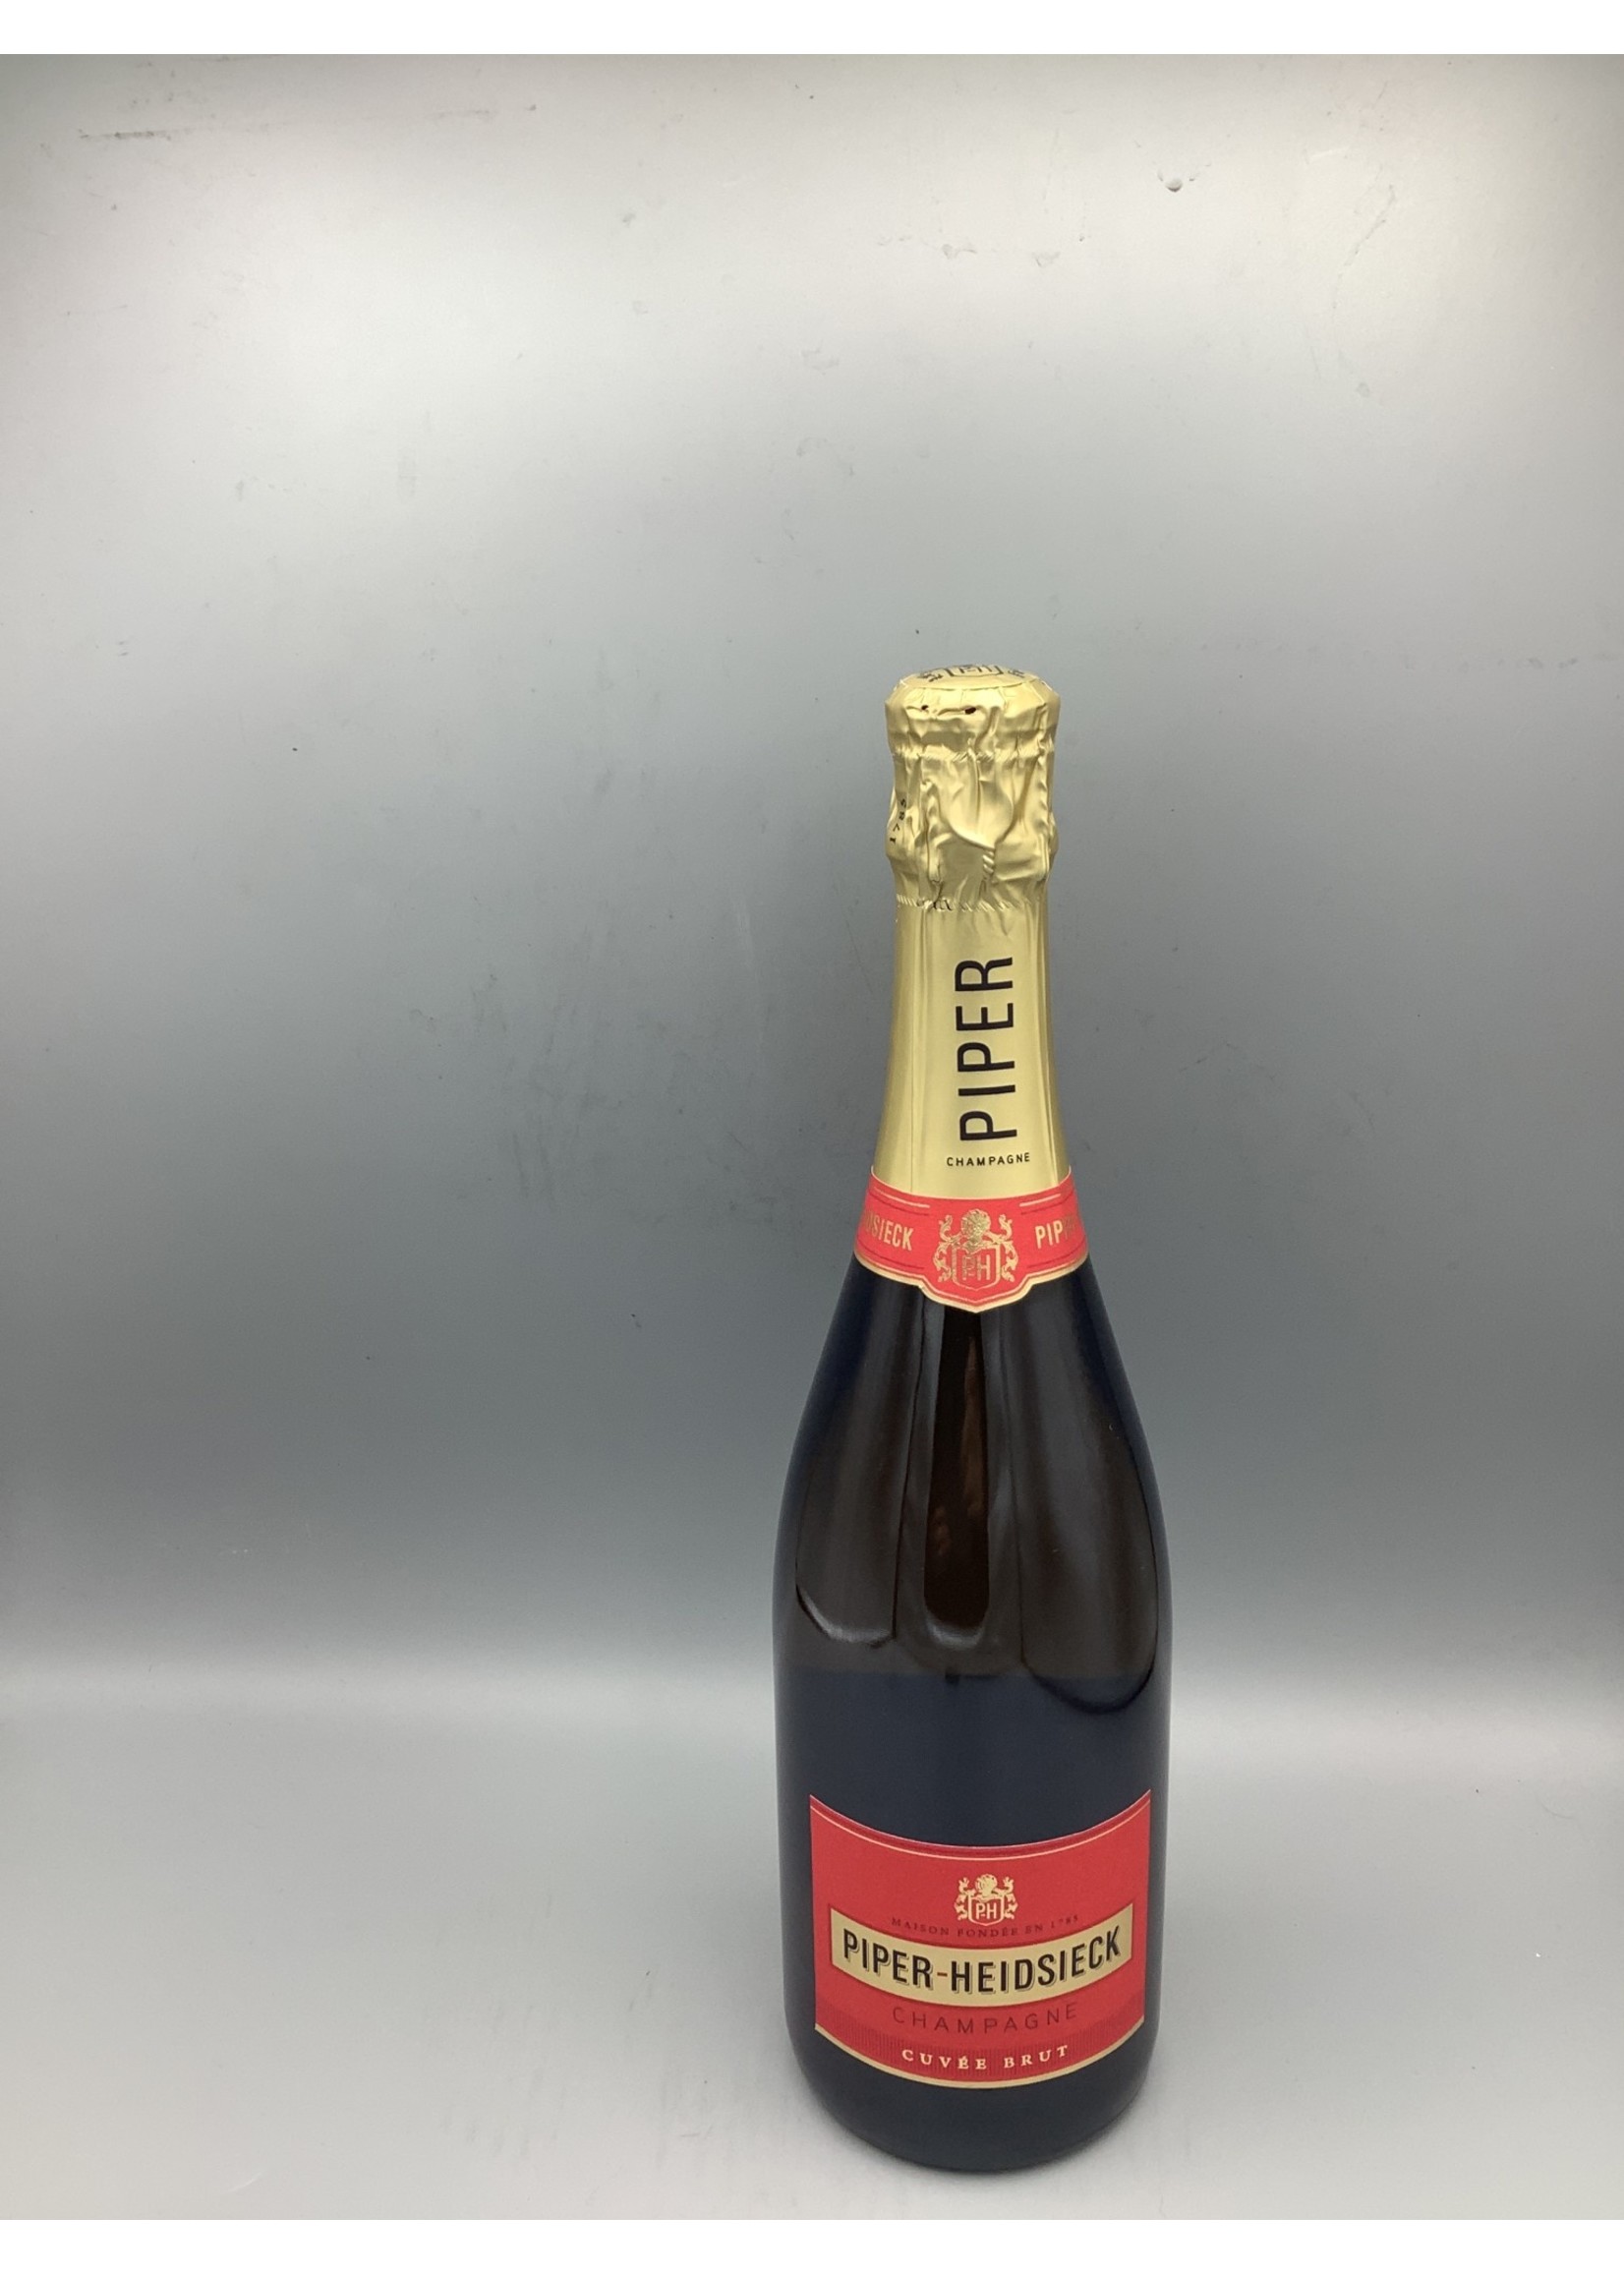 Piper-heidsieck cuvée brut champagne 750ml - Holly Main liquor